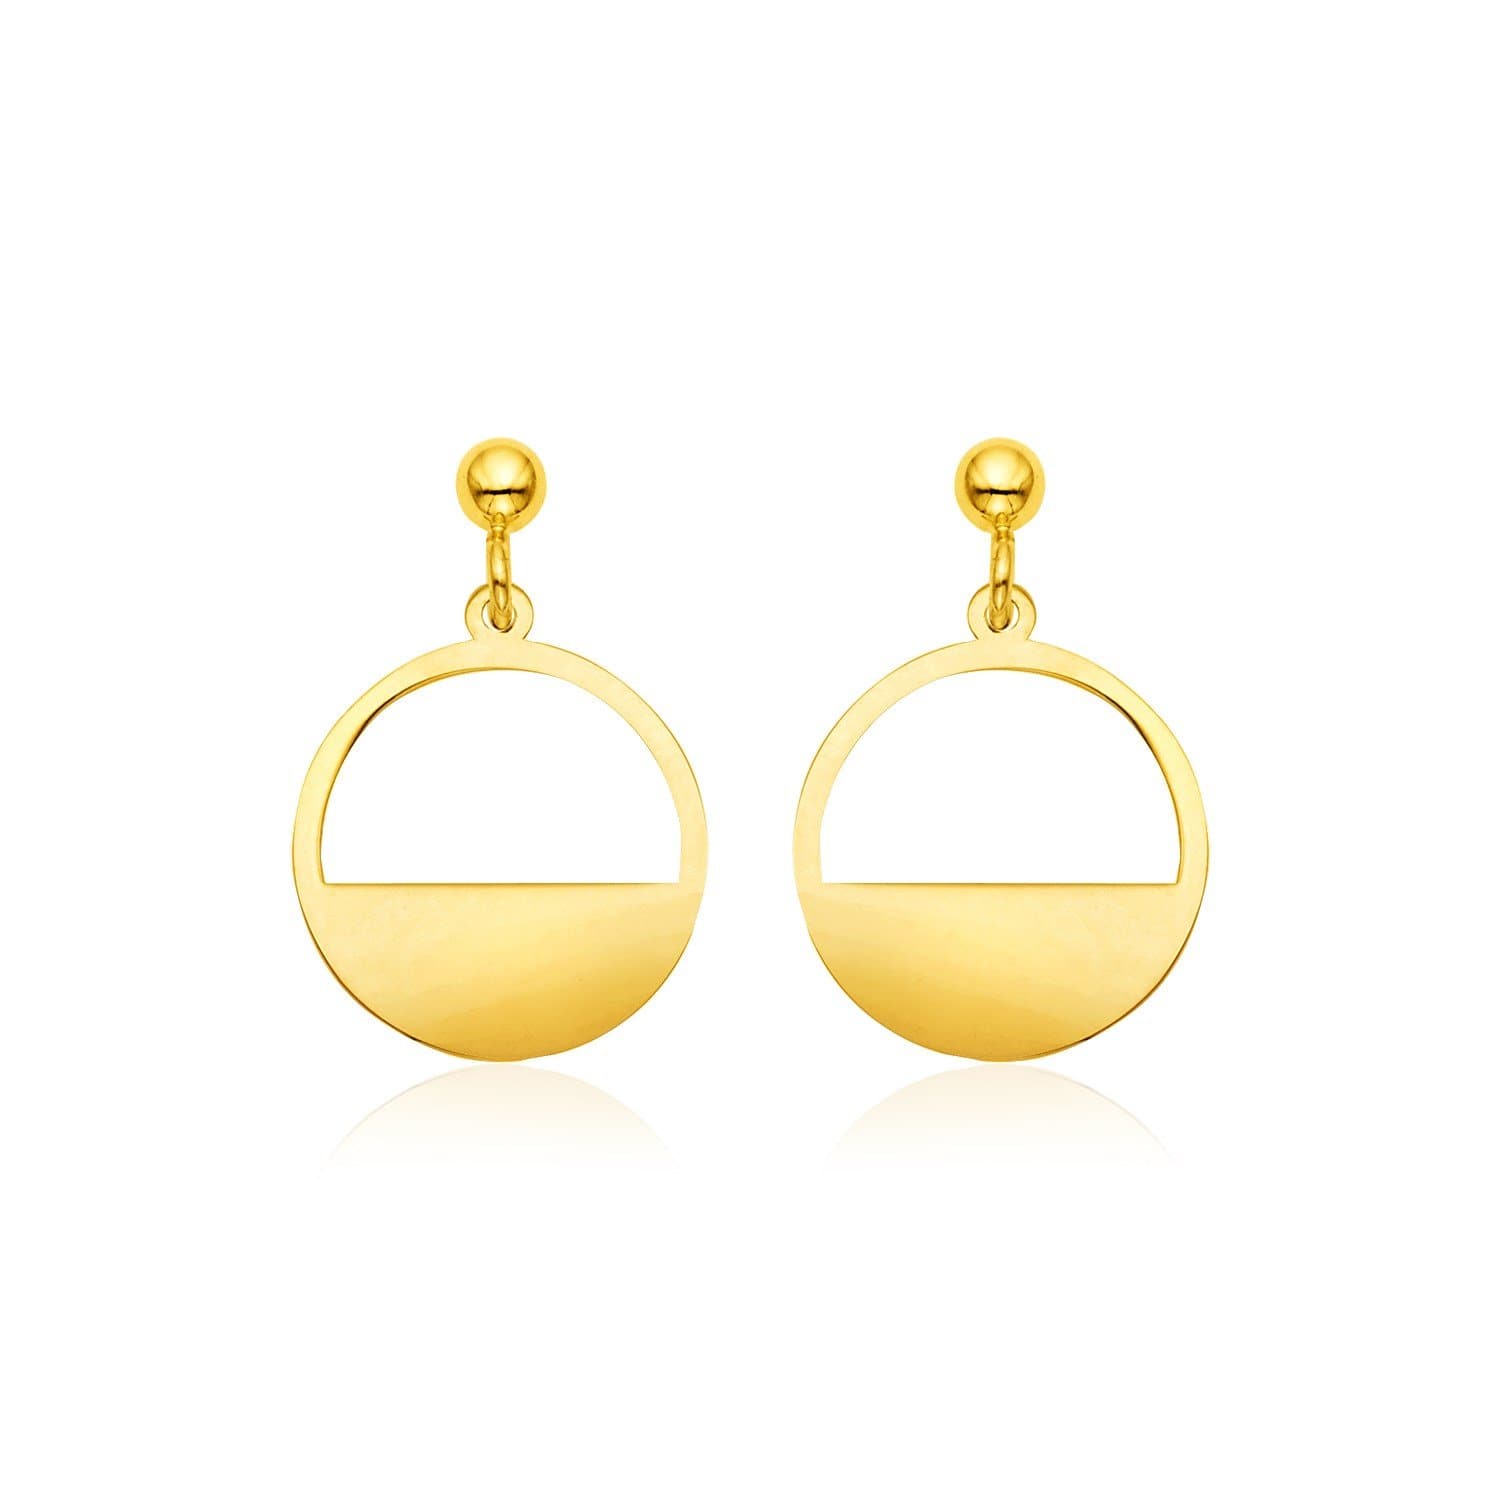 14k Yellow Gold Half Open Circle Earrings